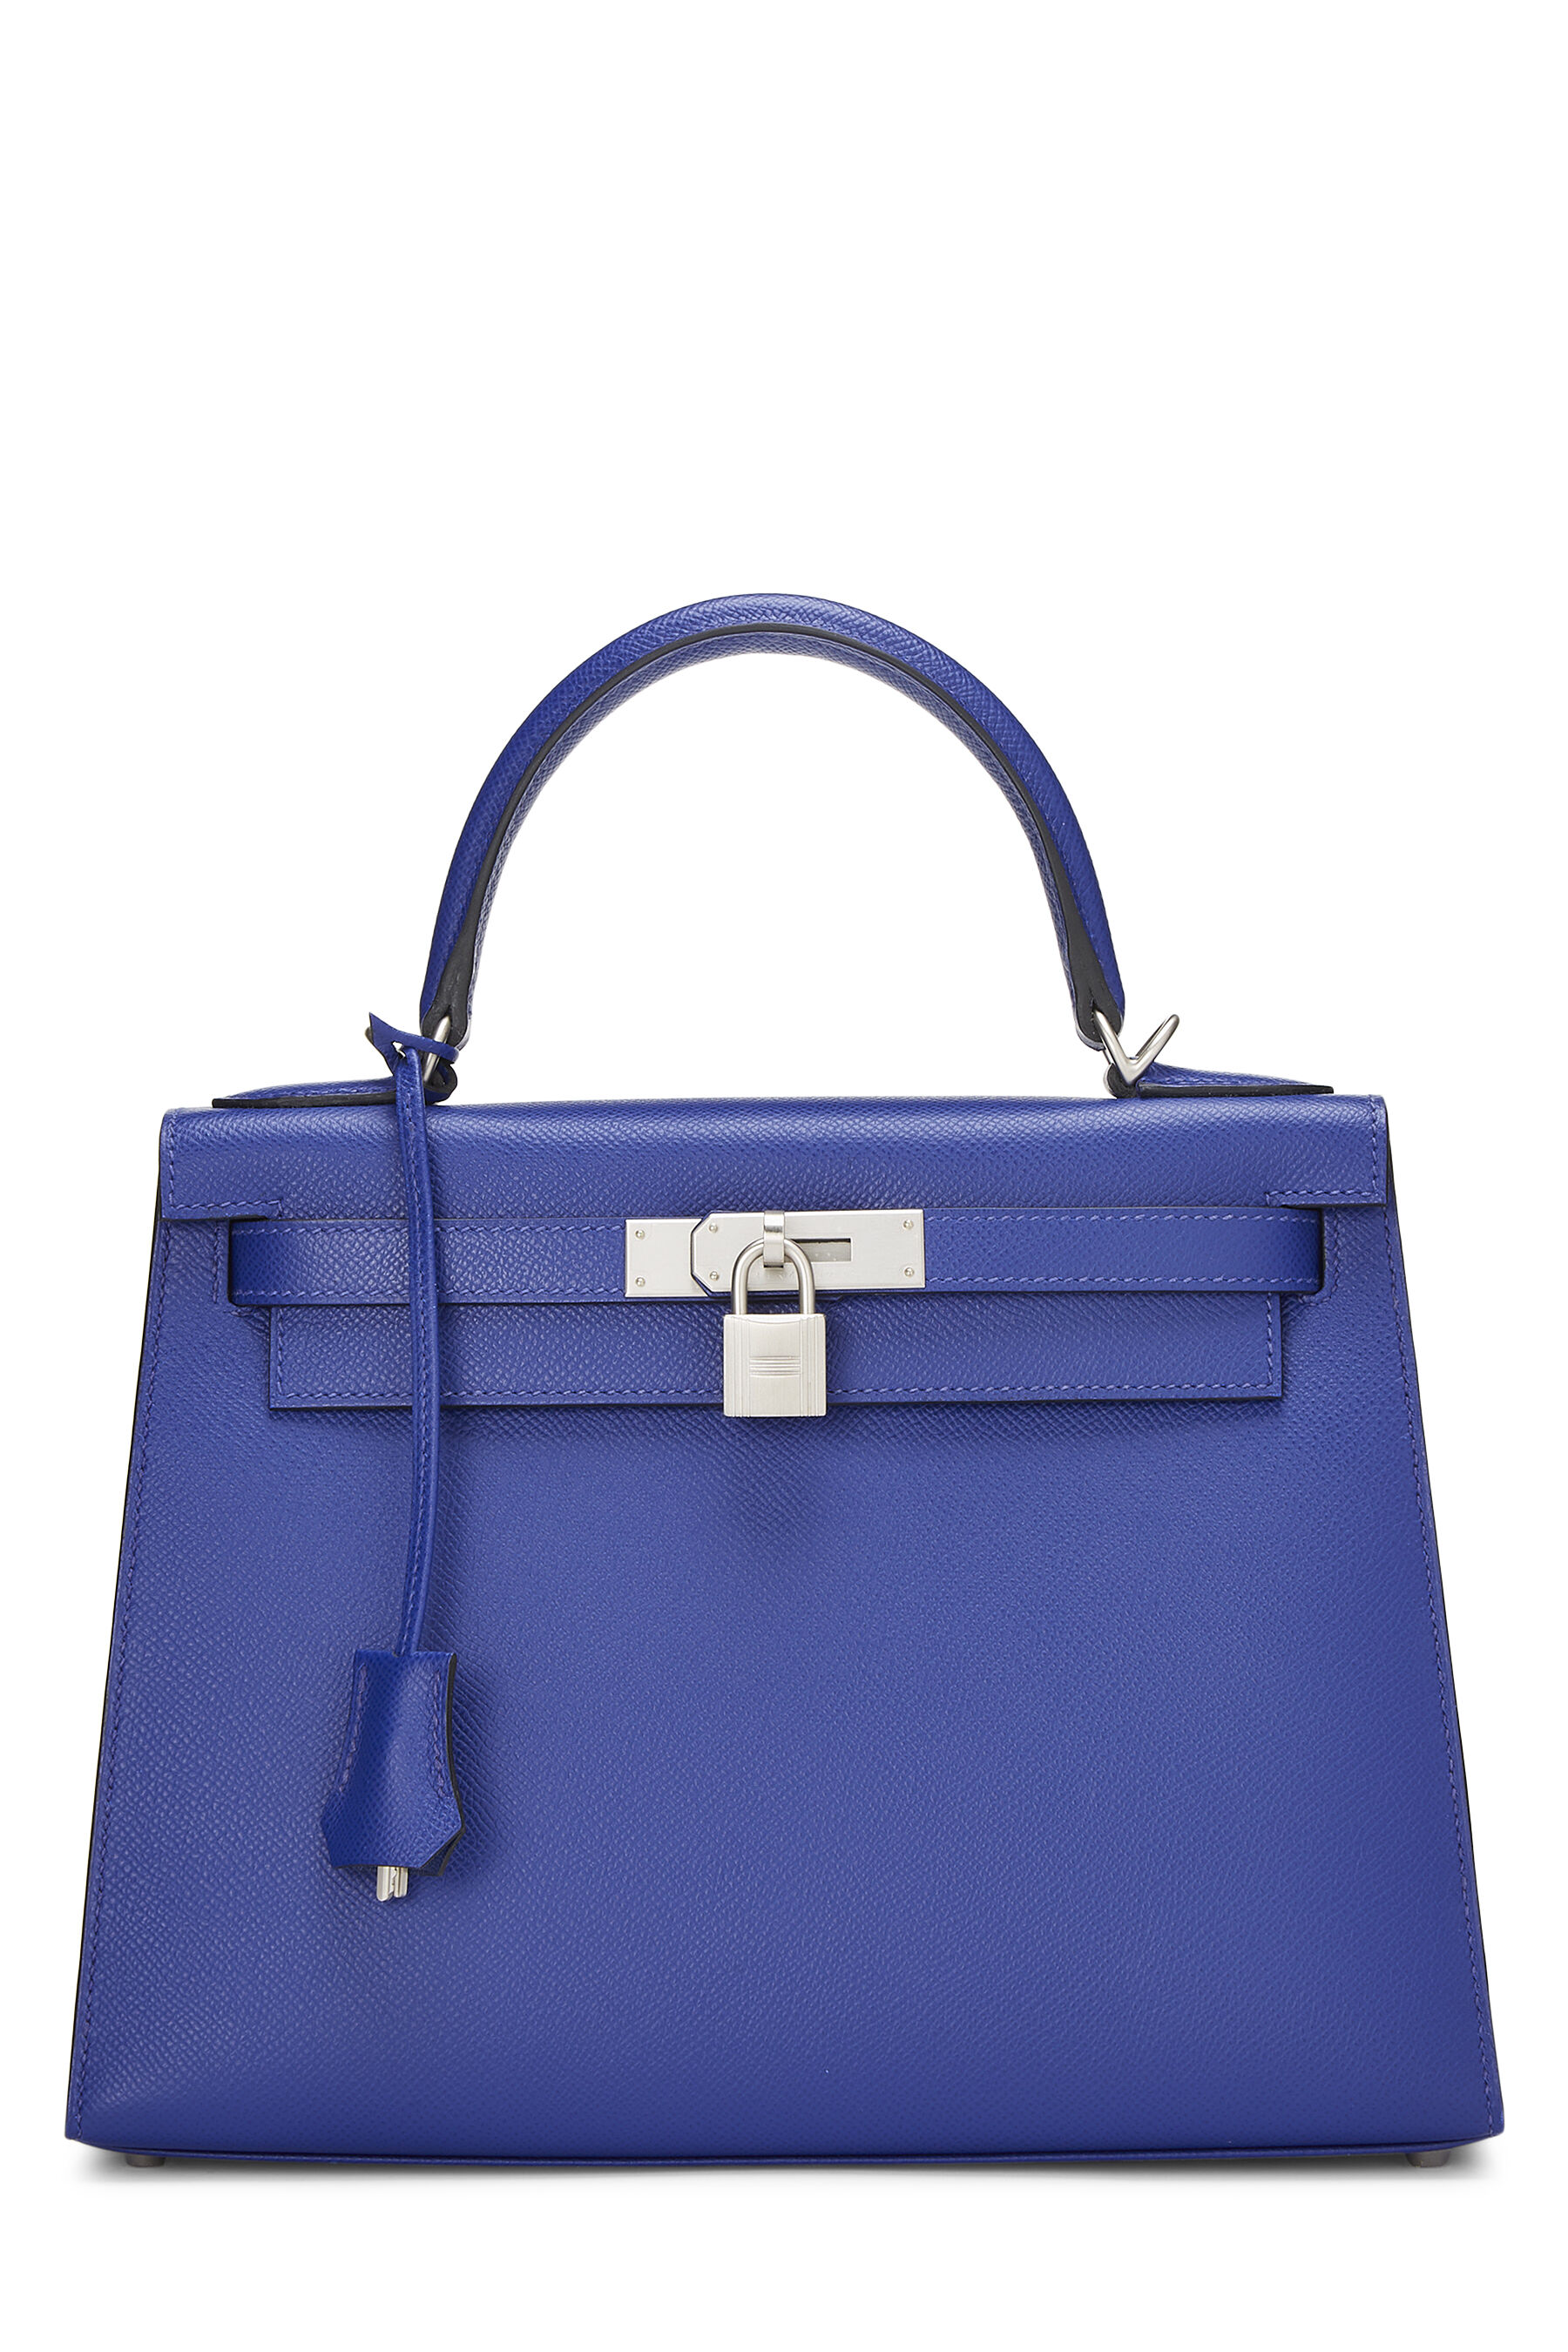 Hermès - Blue Electric Epsom Kelly Sellier 28